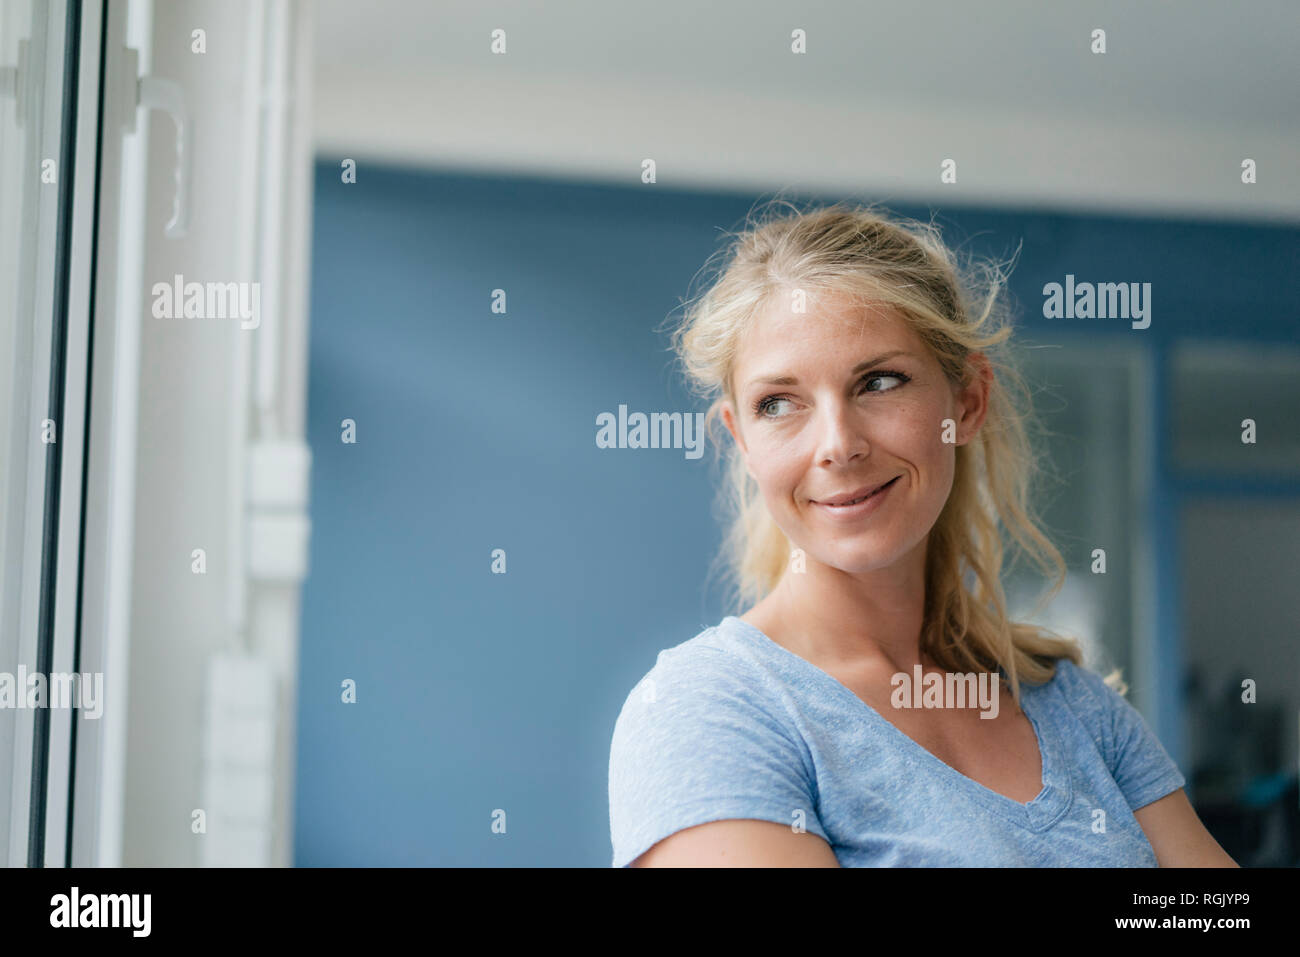 Portrait of smiling blond woman looking sideways Stock Photo